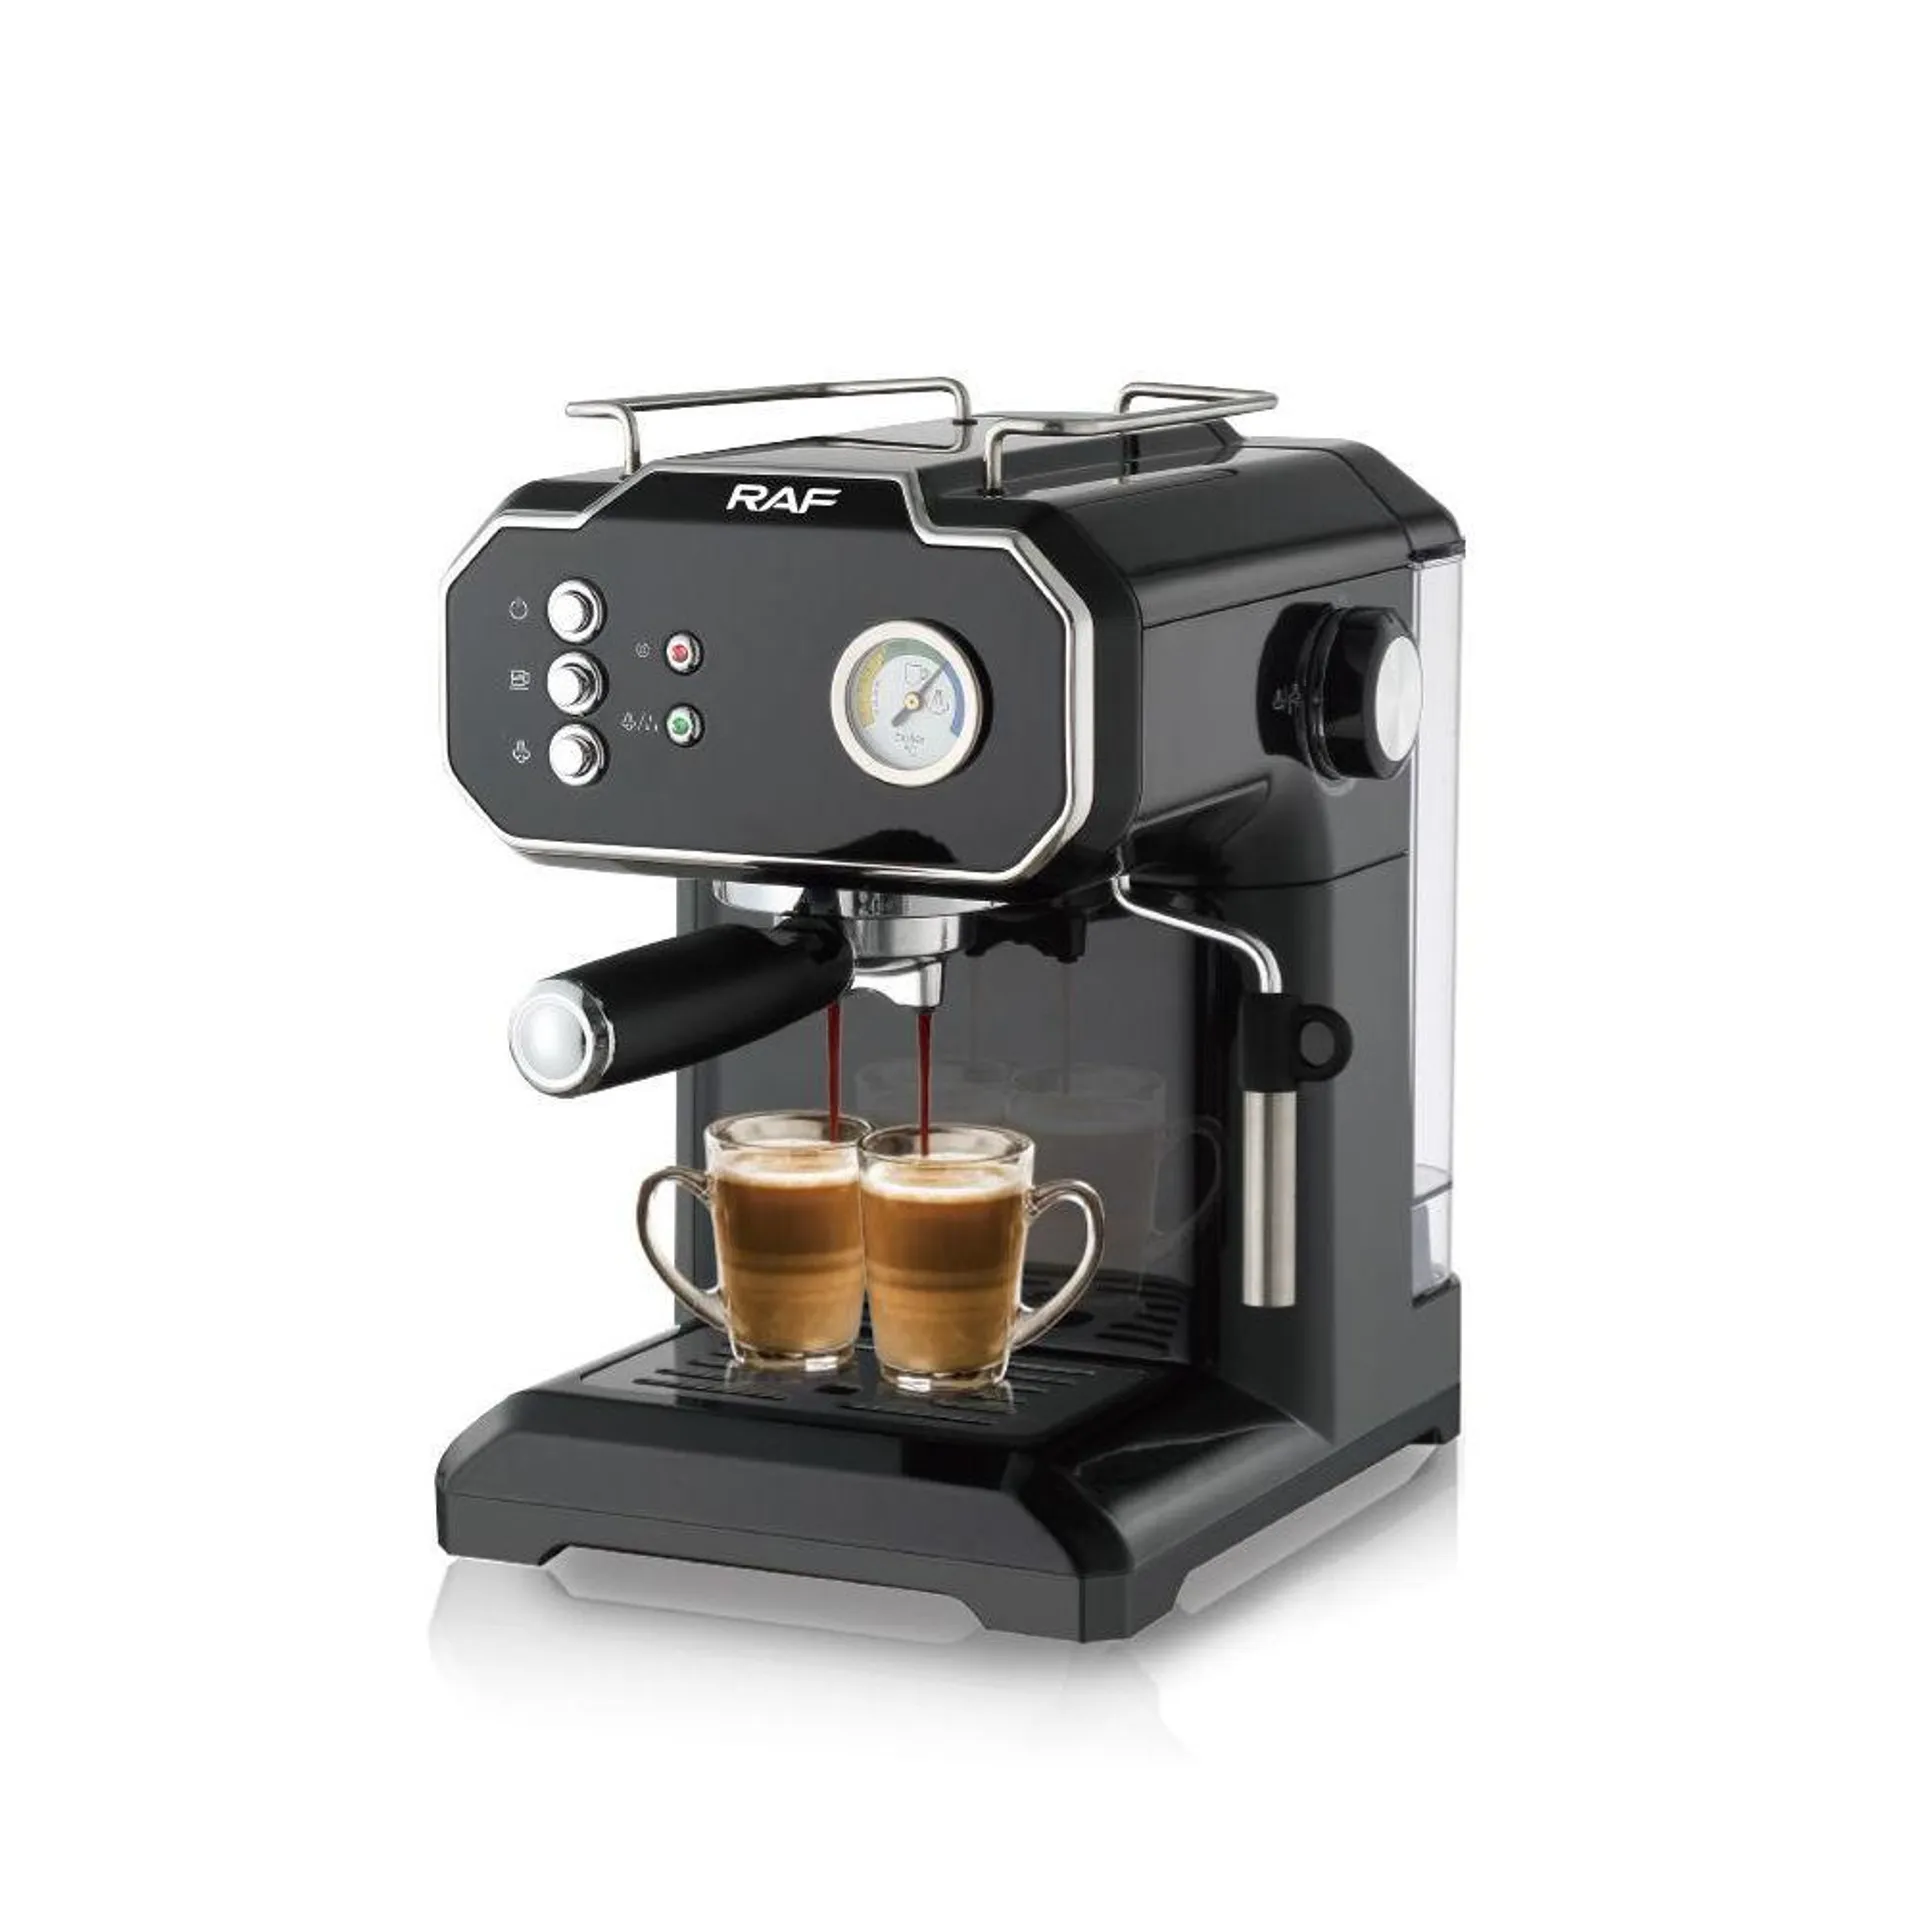 RAF 1.8L Espresso Coffee Machine - Black